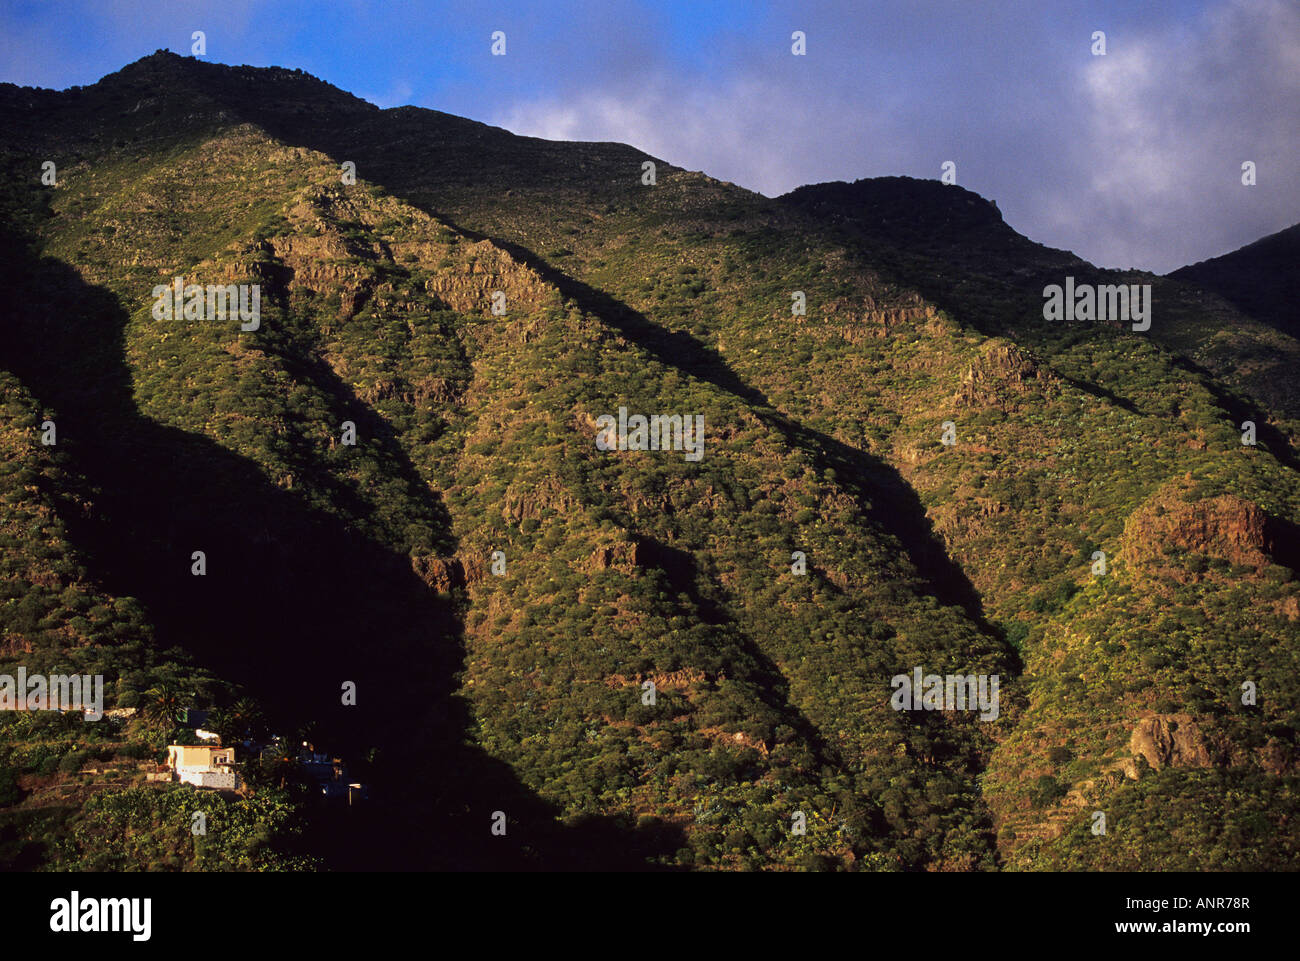 Masca massif TENERIFE ISLAND Canary Islands SPAIN Stock Photo